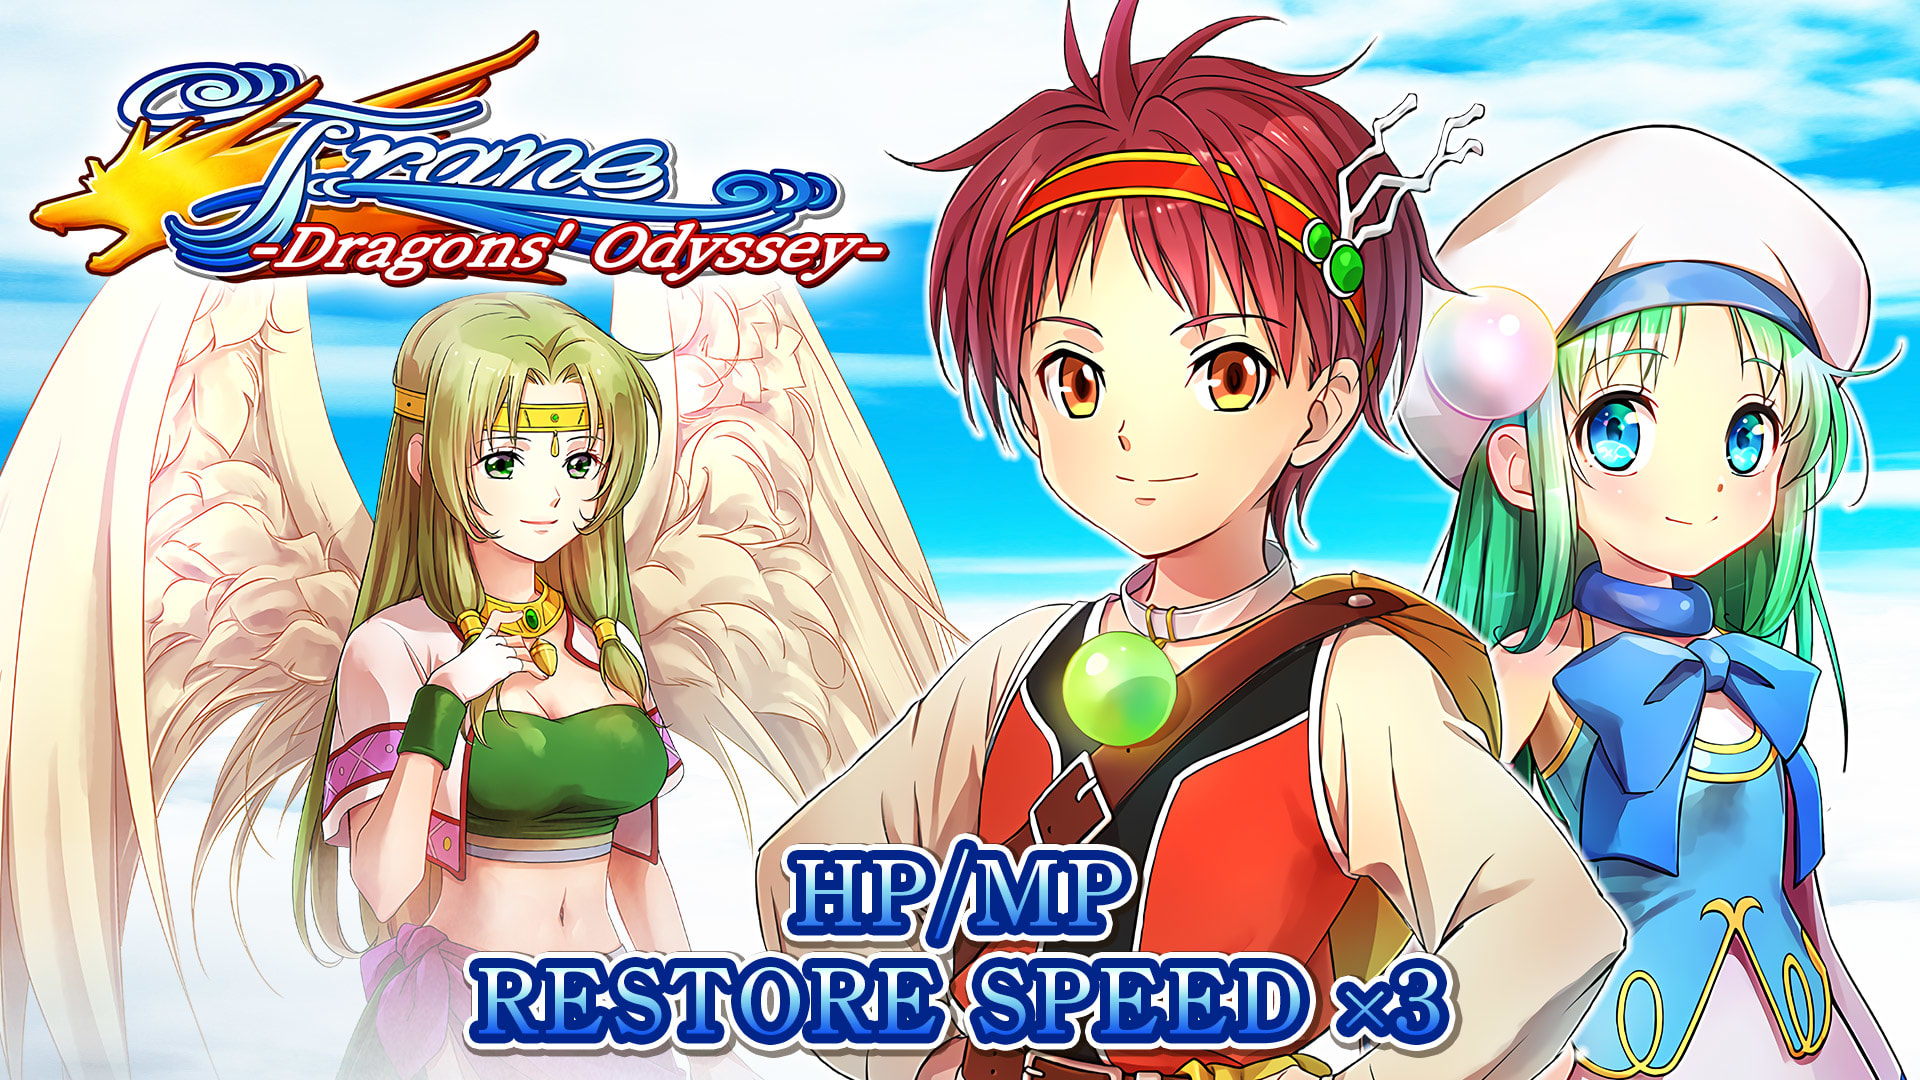 HP/MP Restore Speed x3 - Frane: Dragons' Odyssey